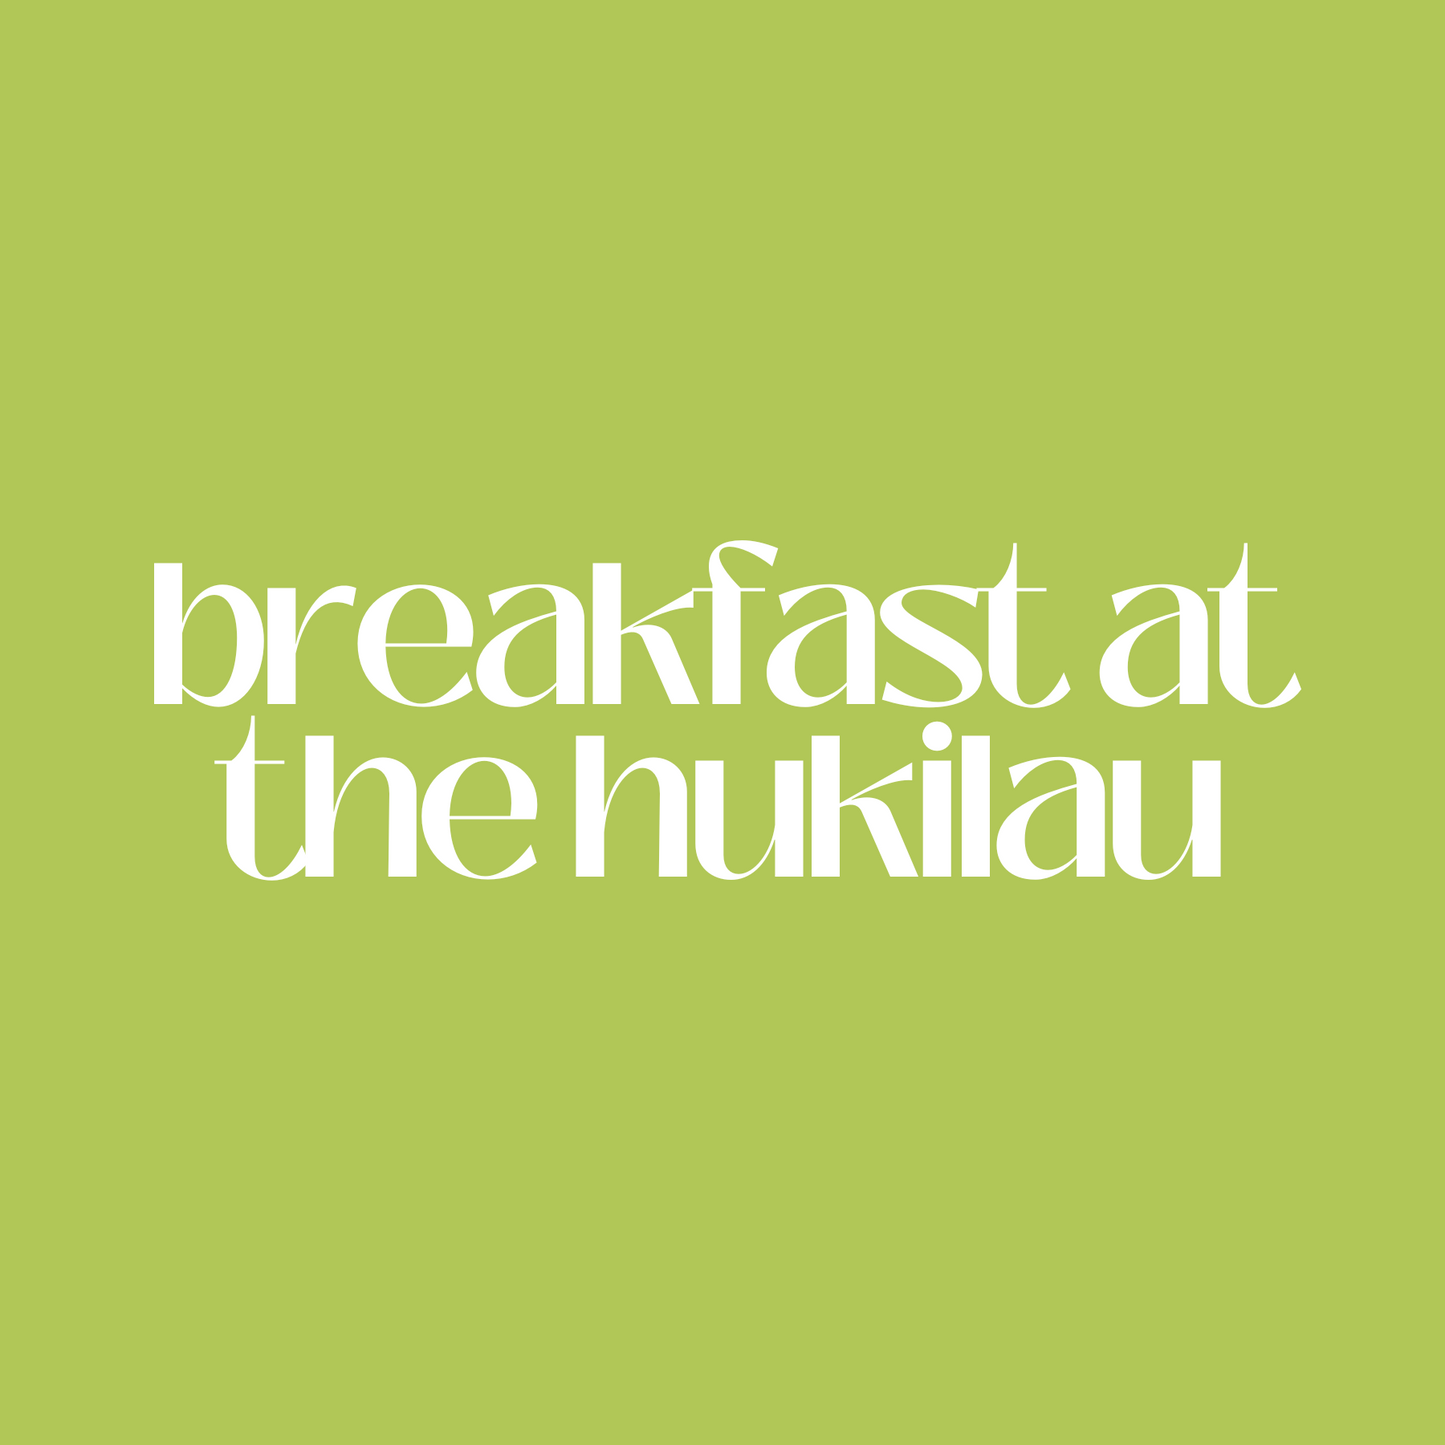 Breakfast at the Hukilau